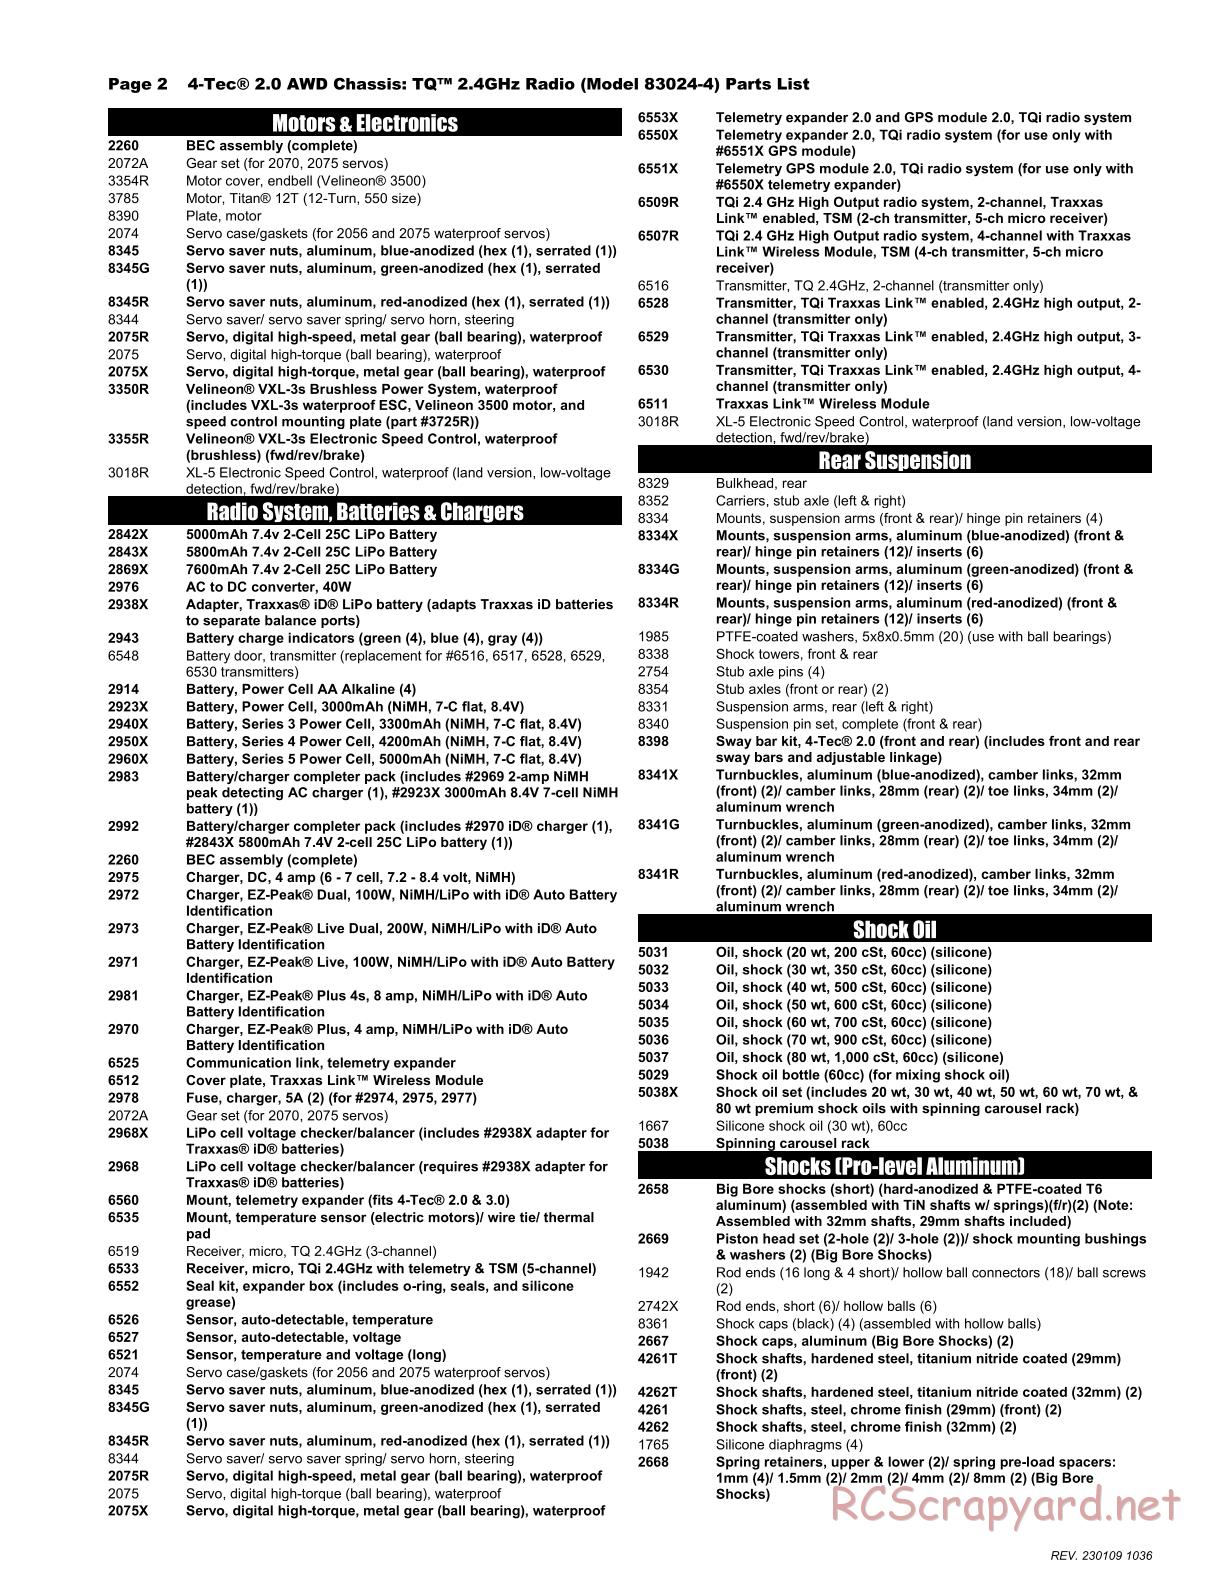 Traxxas - 4-Tec 2.0 XL-5 - Parts List - Page 2